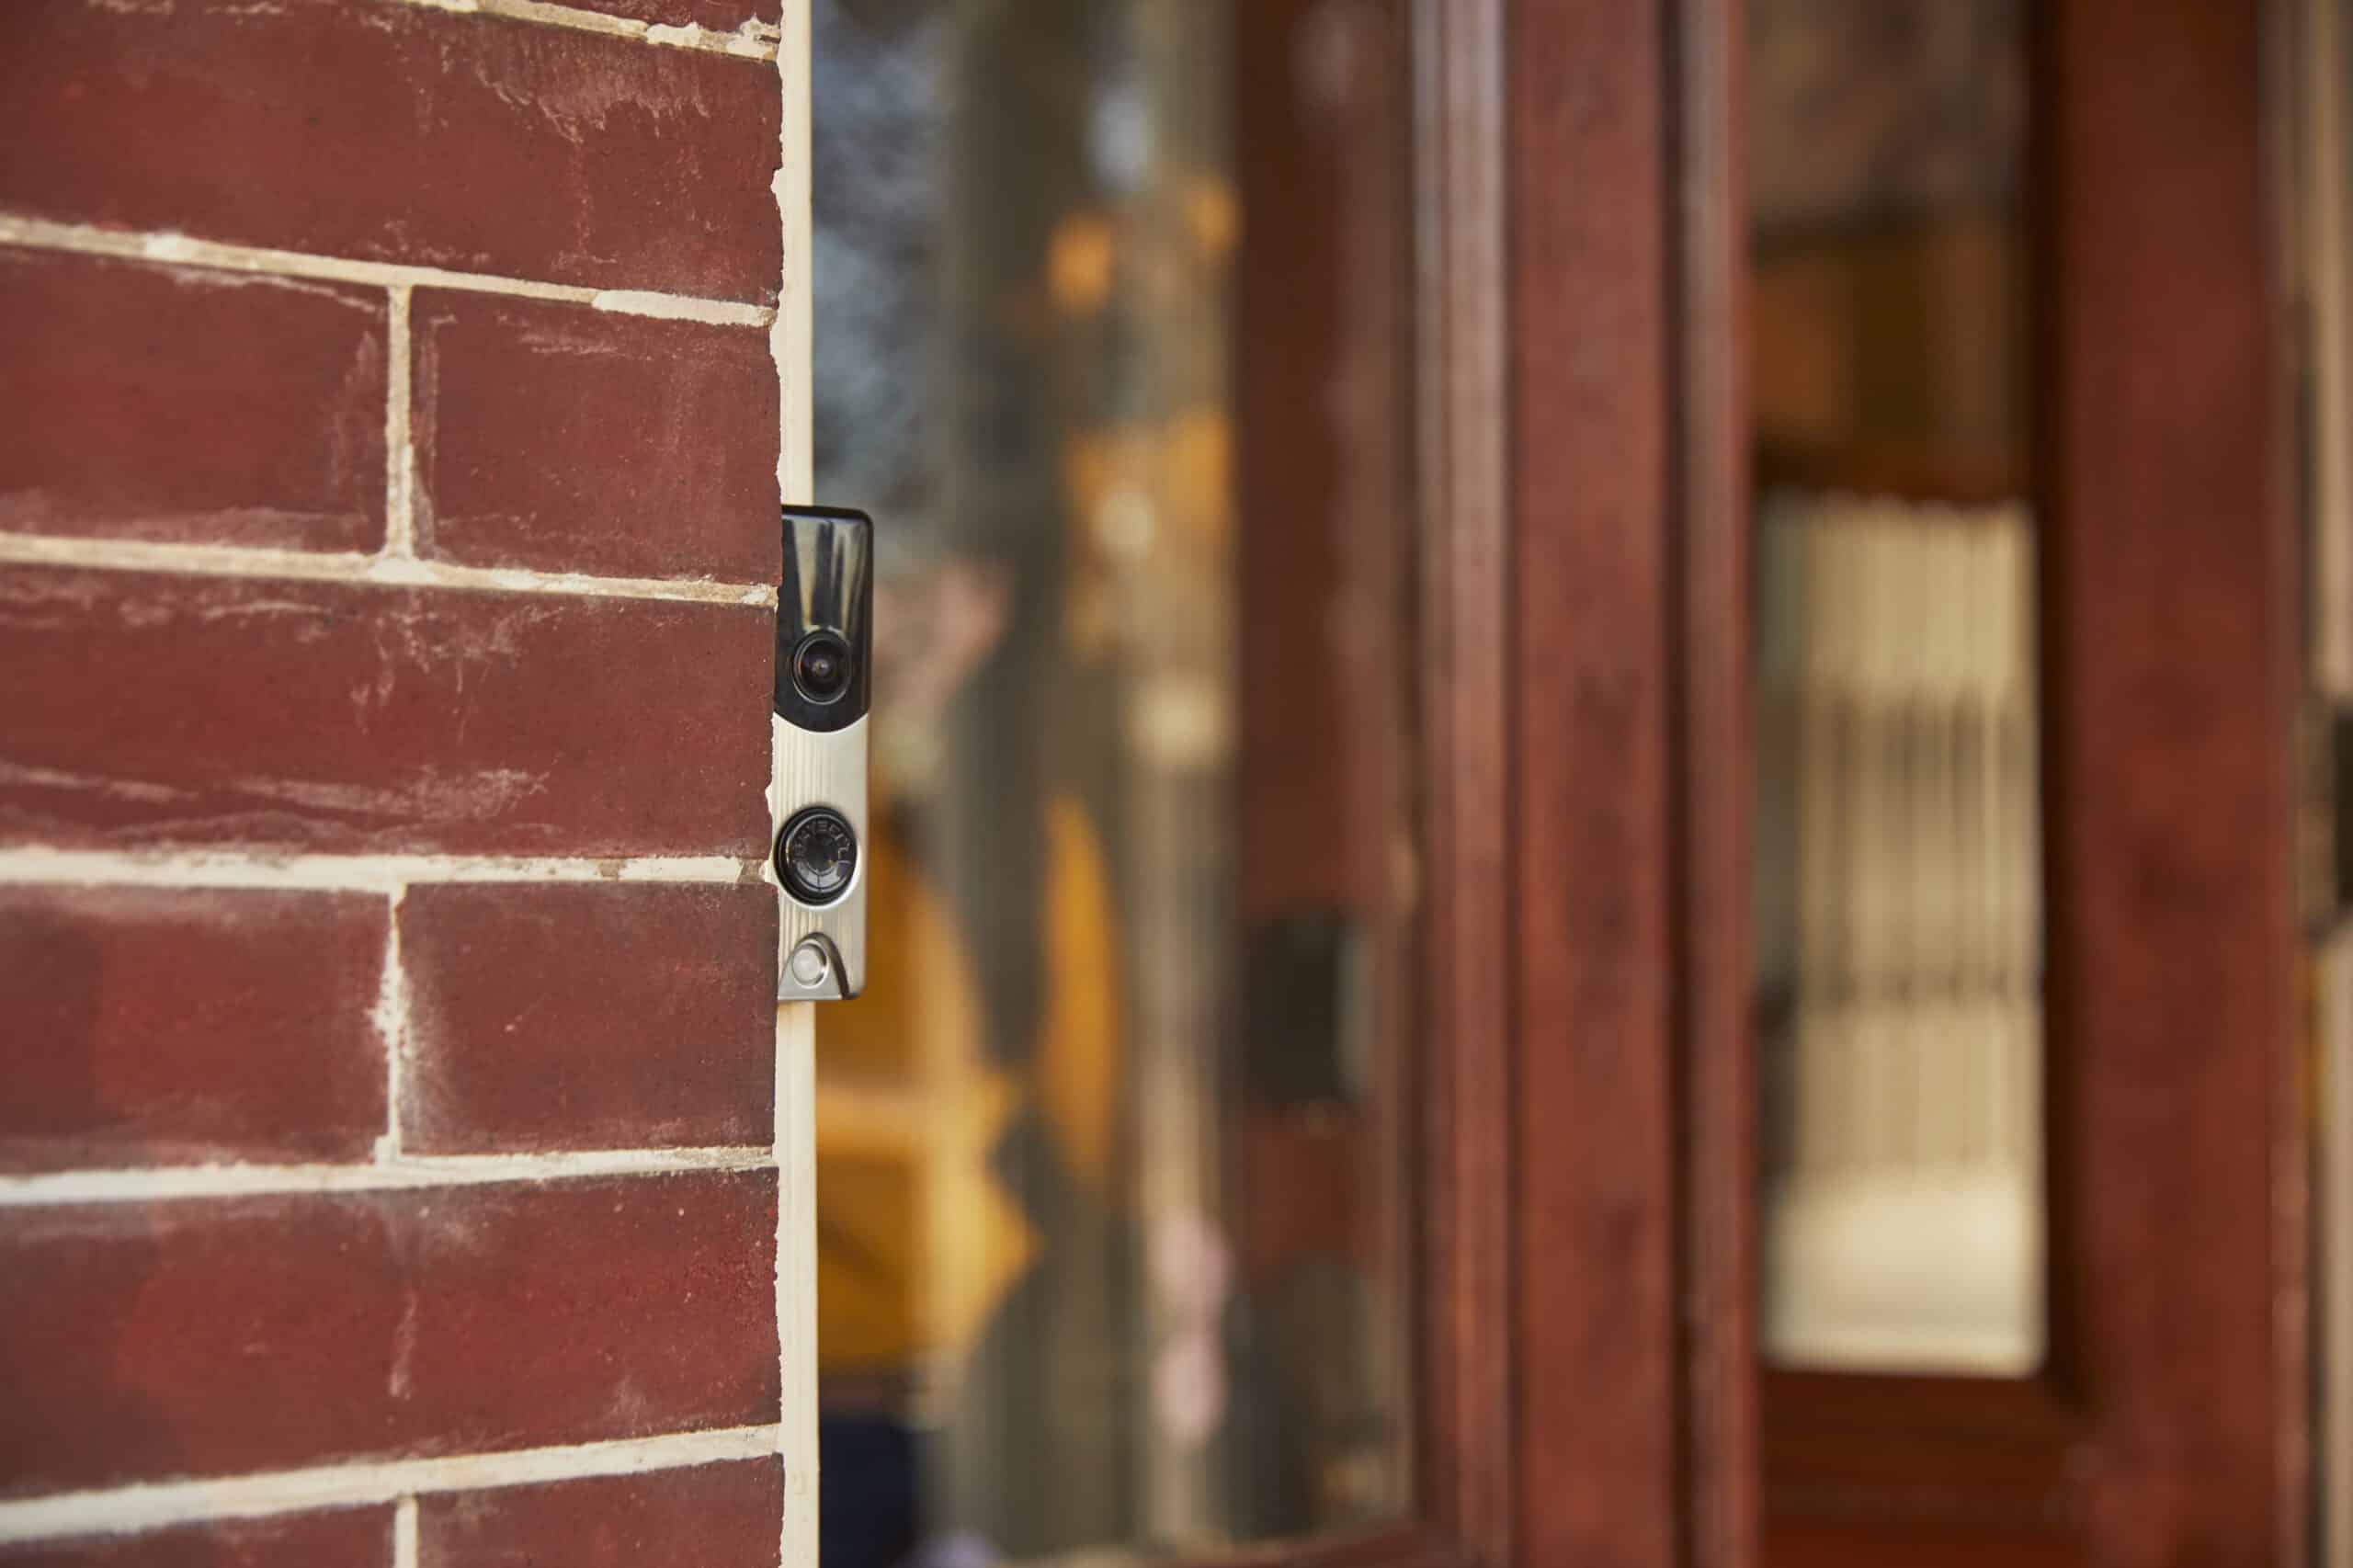 BrightSuite Doorbell Camera